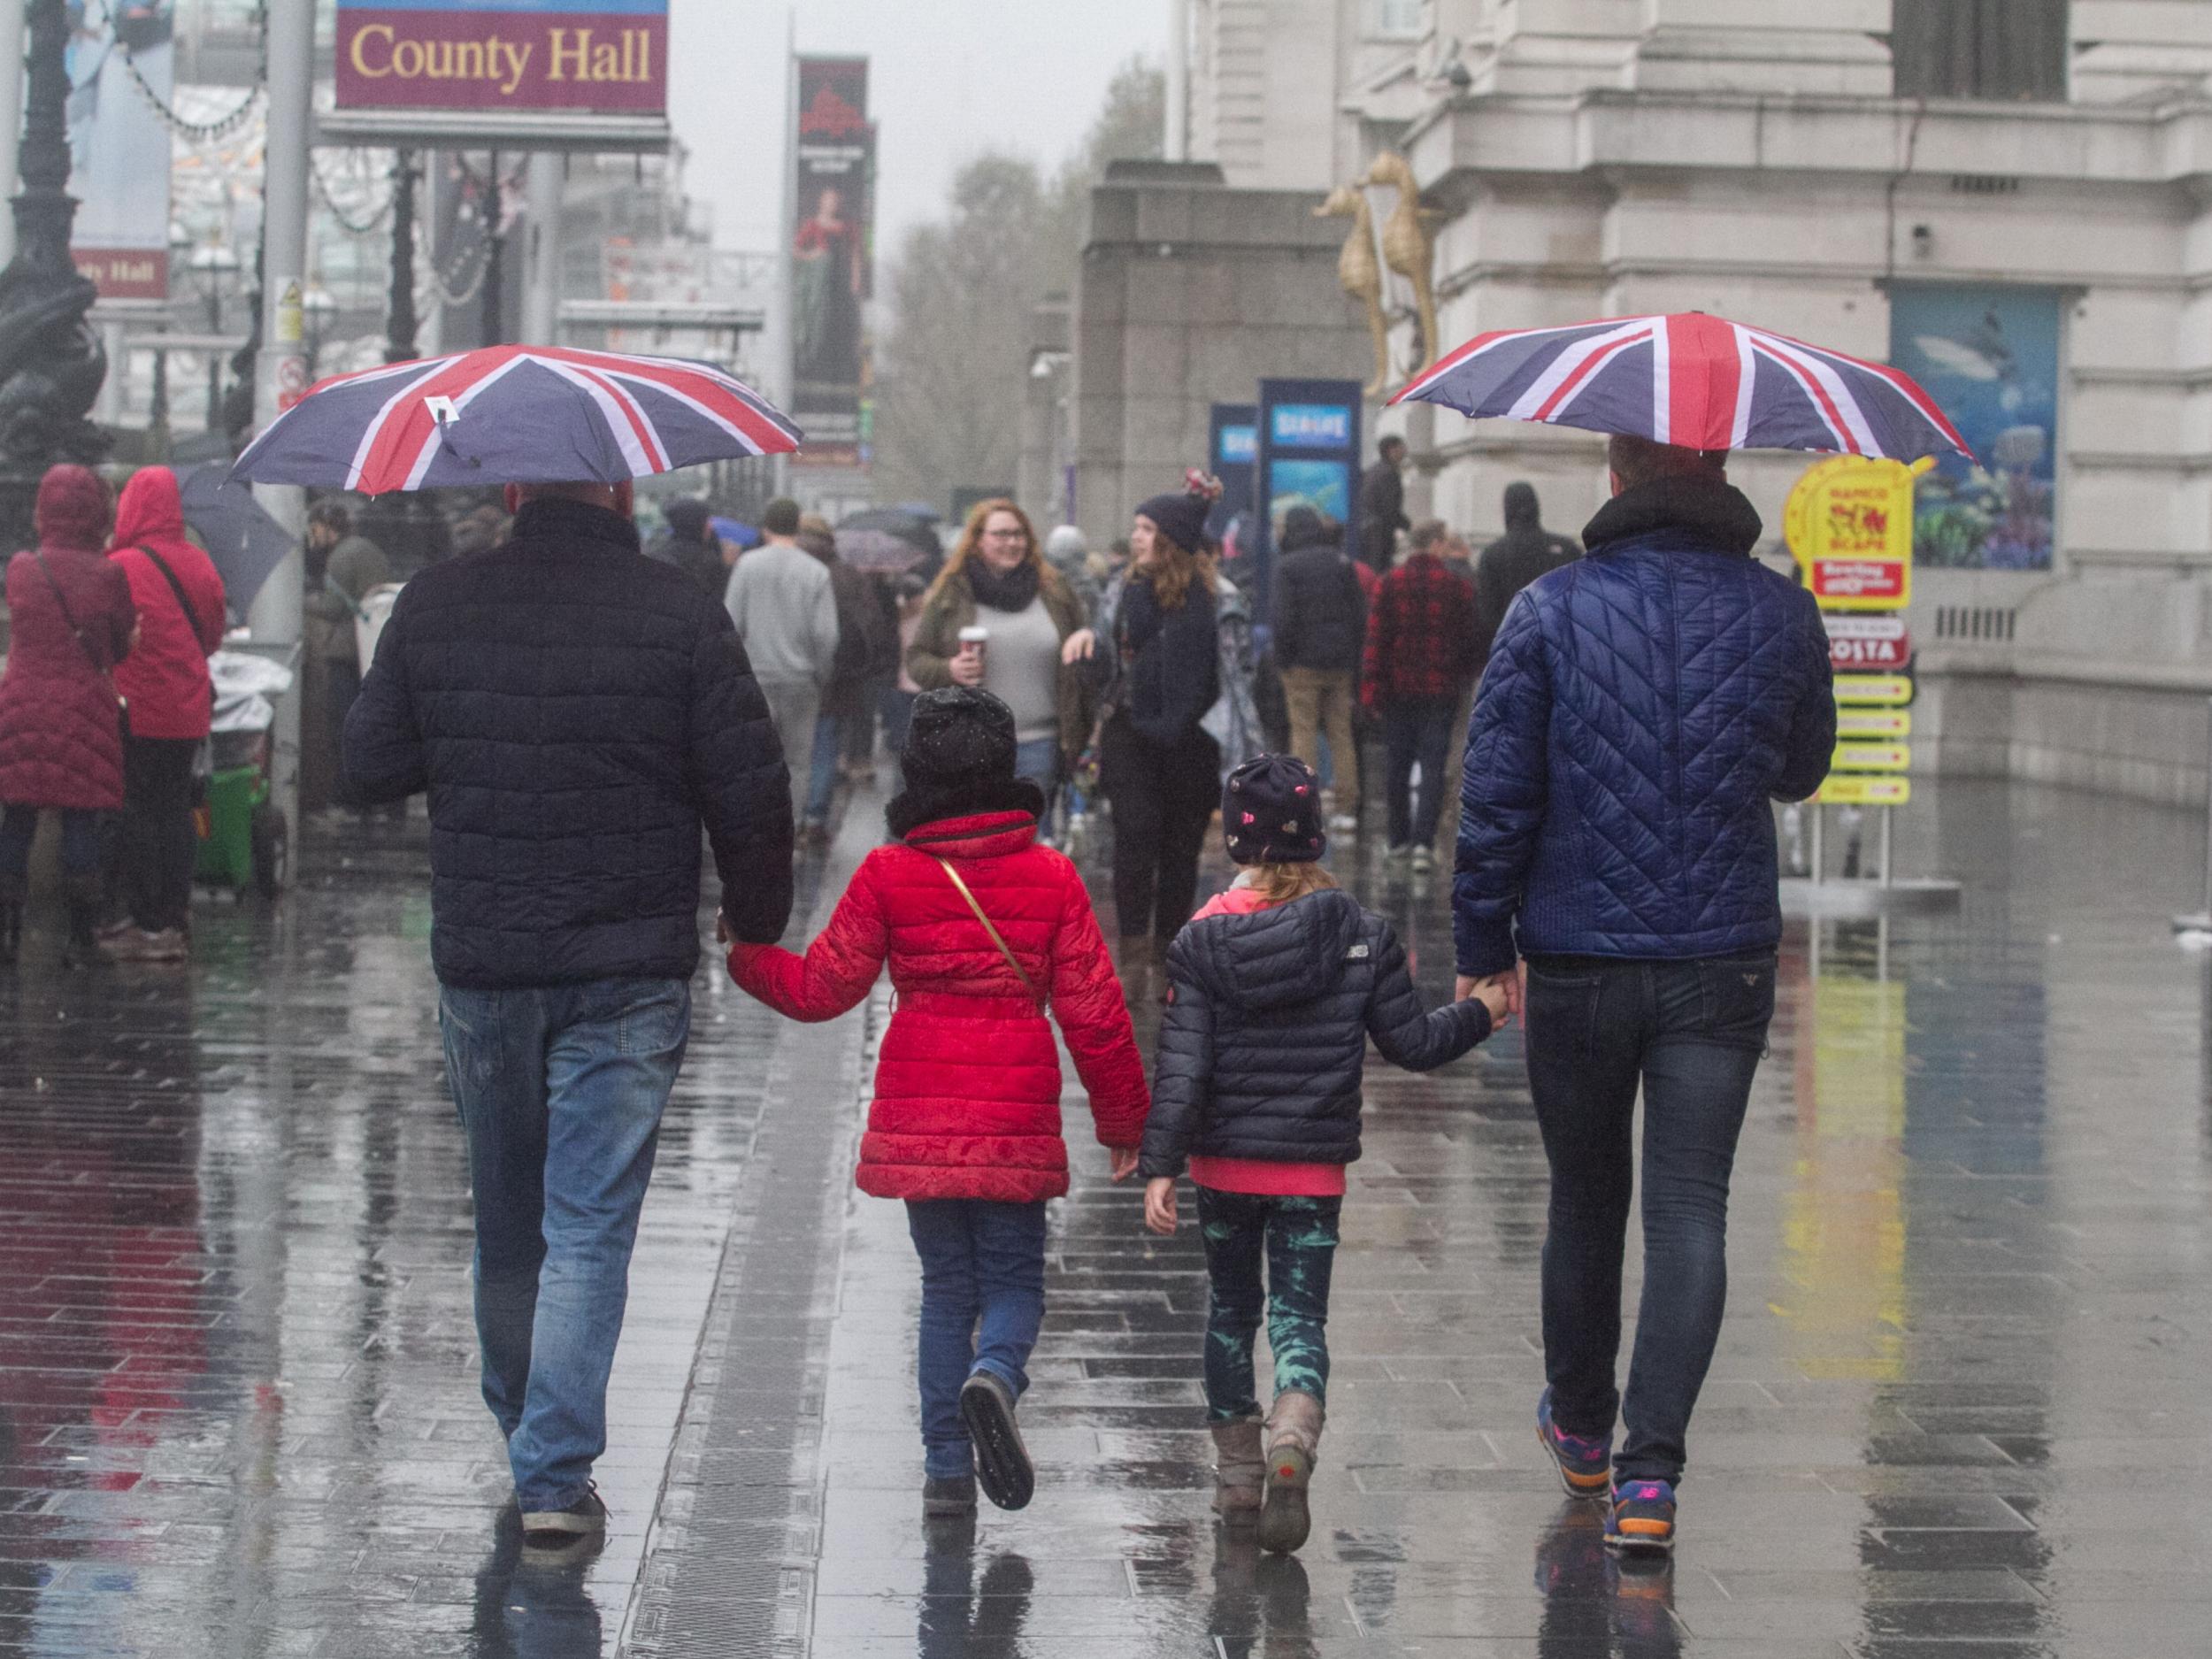 Pedestrians shelter from the rain on Westminster Bridge